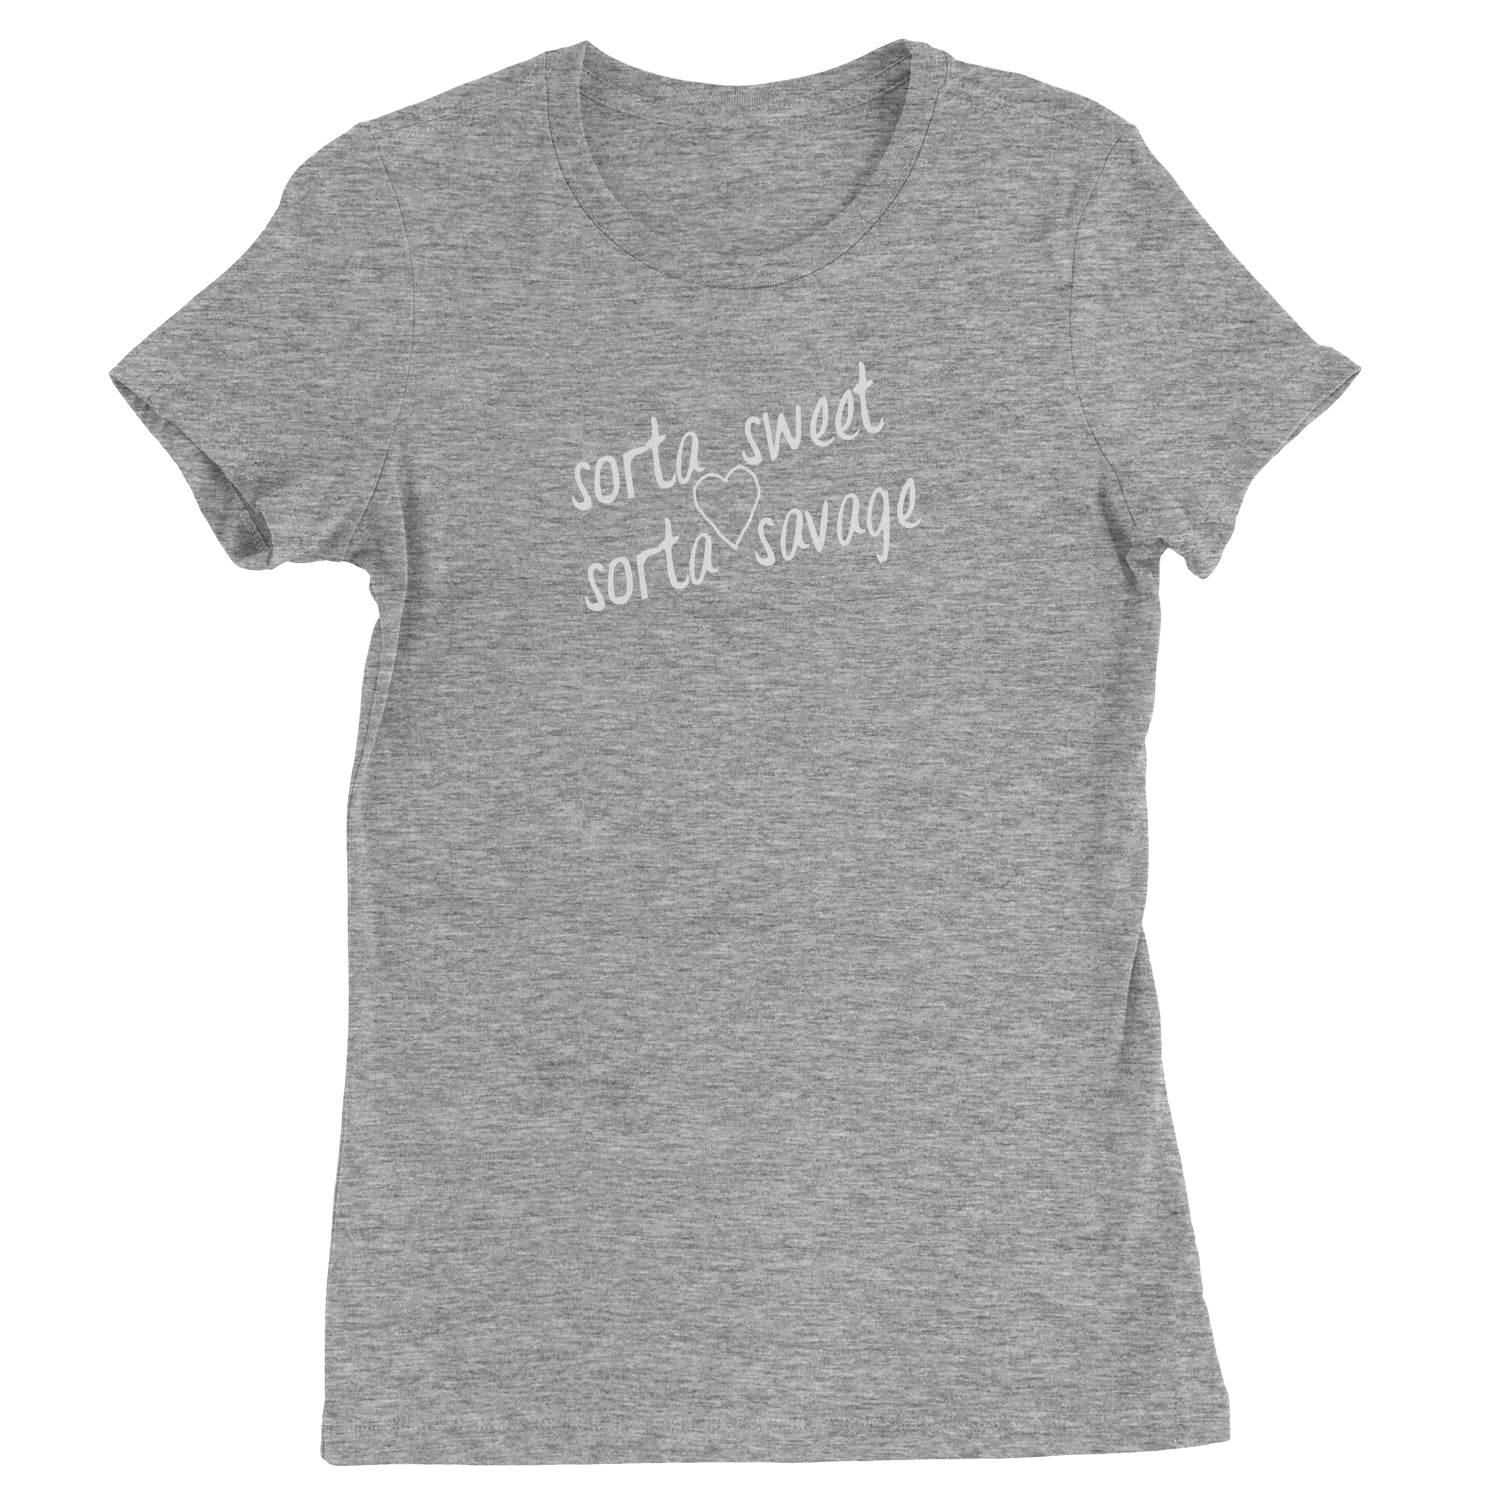 Sorta Sweet Sorta Savage Womens T-shirt savage by Expression Tees